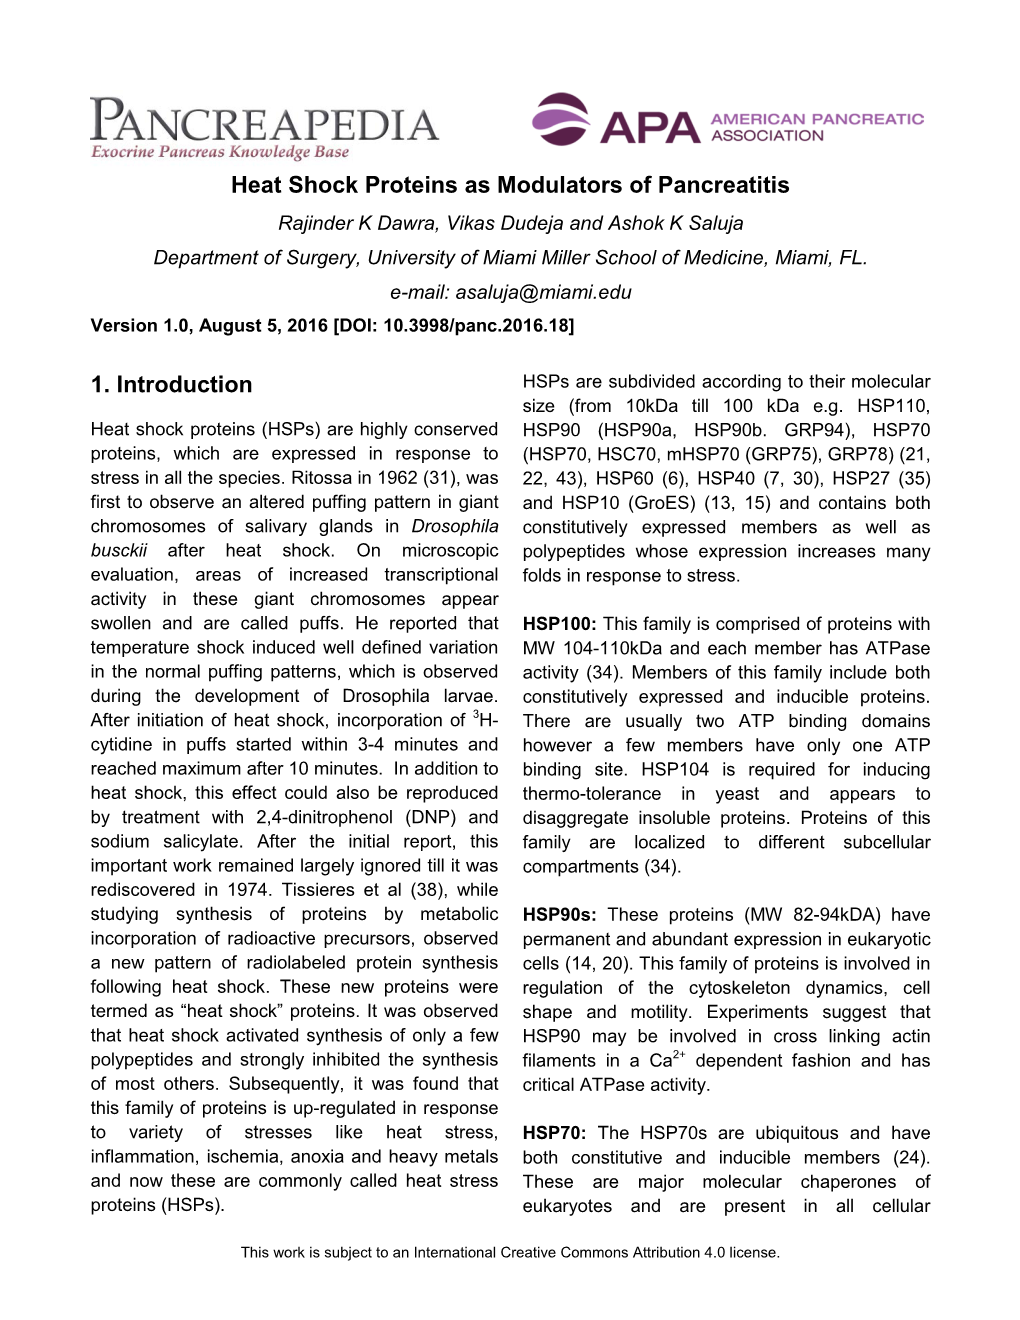 Heat Shock Proteins As Modulators of Pancreatitis